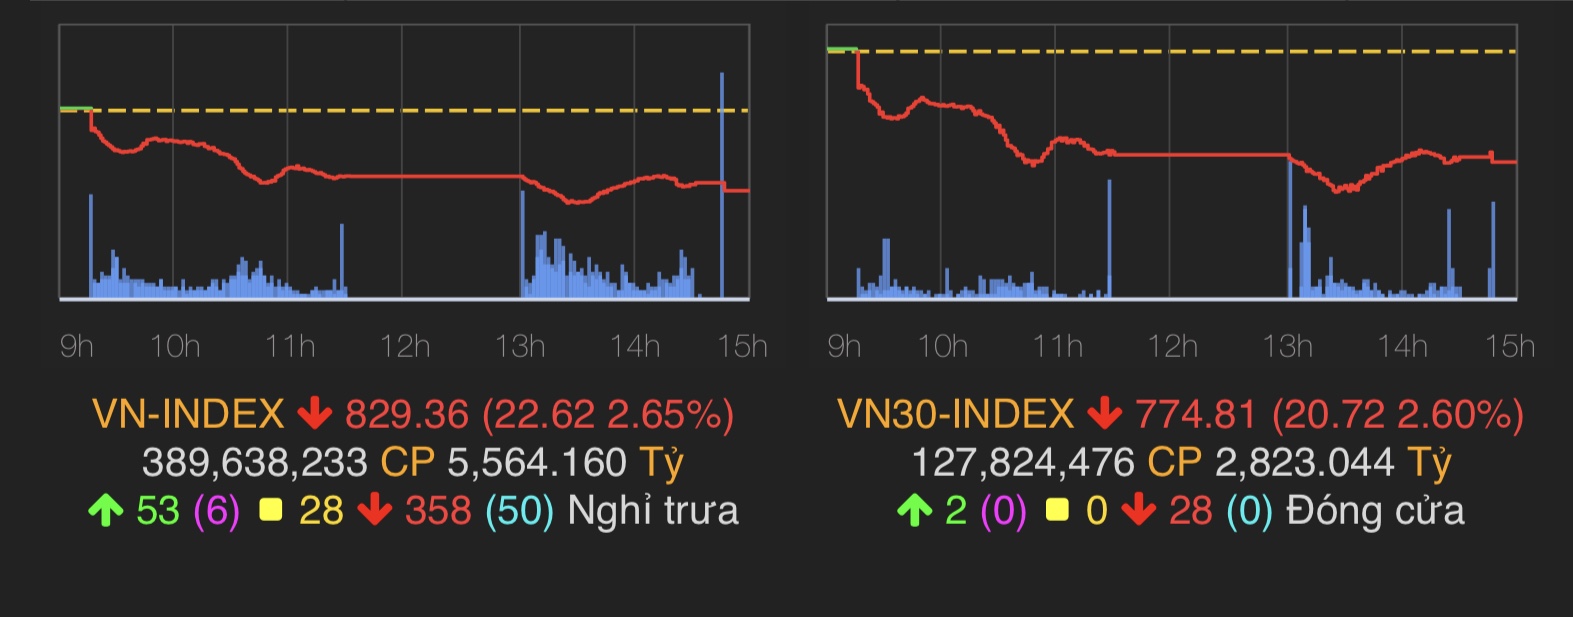 VN-Index giảm 22,62 điểm (2,65%) xuống 829,36 điểm